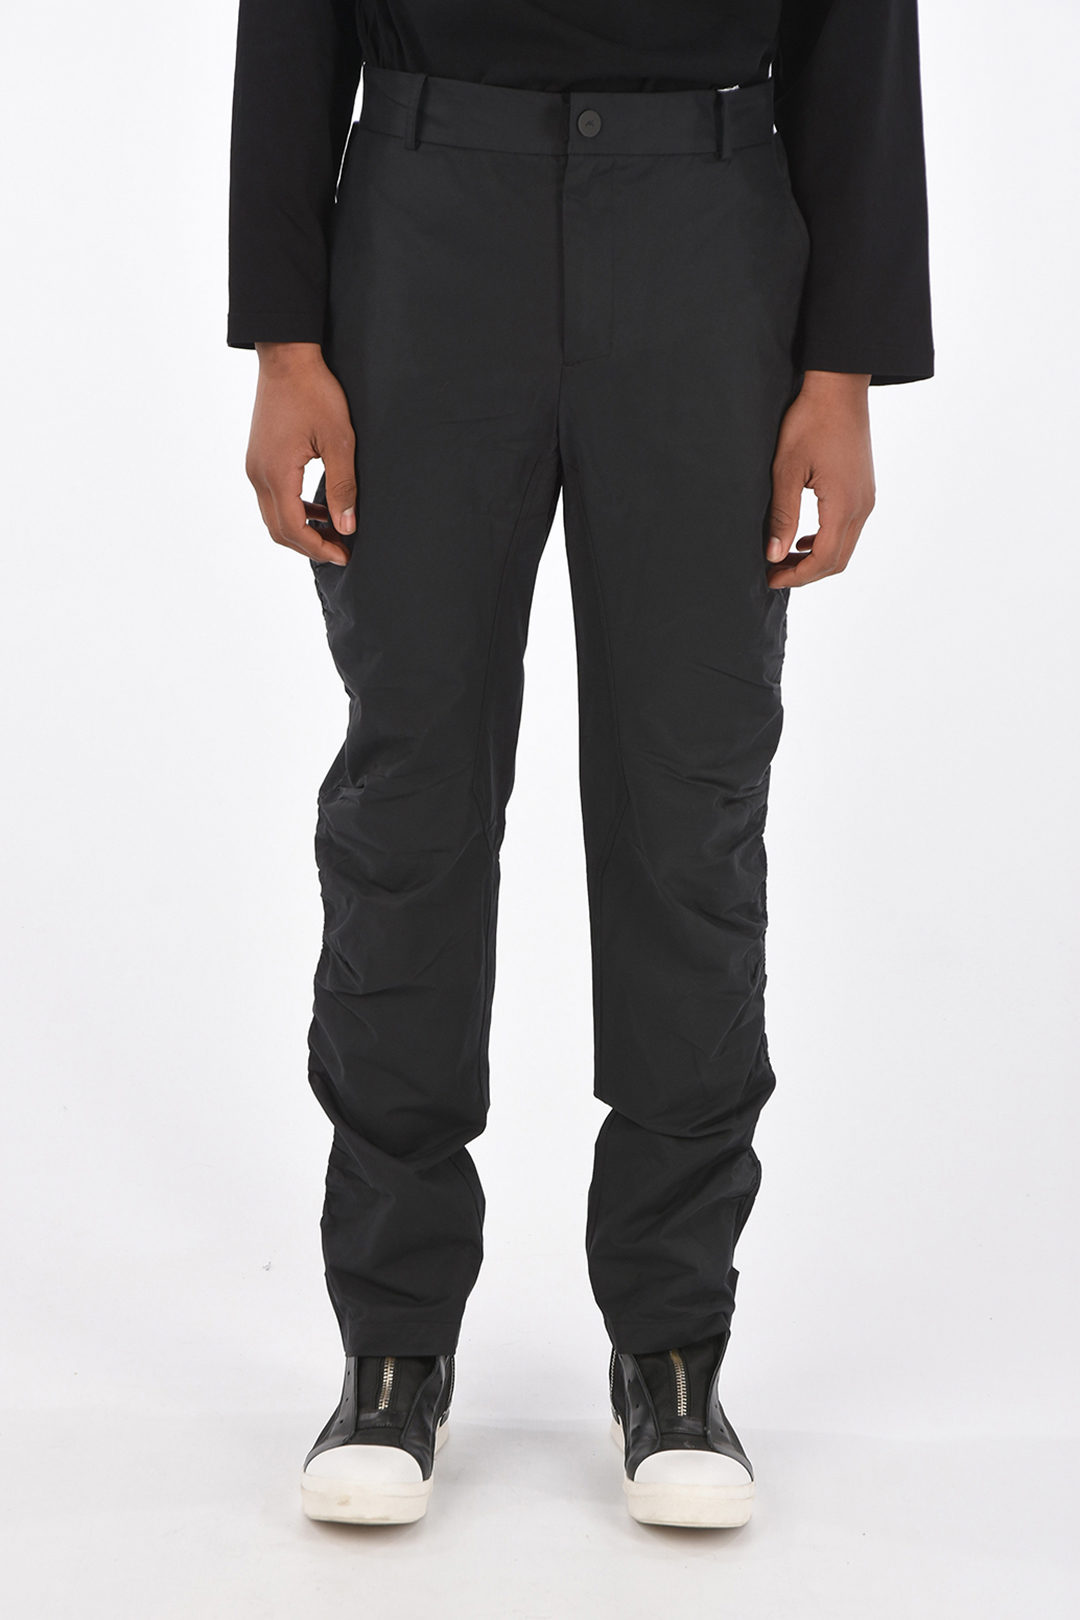 Stretchy Ankle Pants|men's Slim Fit Stretch Suit Pants - Micro-elastic  Spring/autumn Office Wear